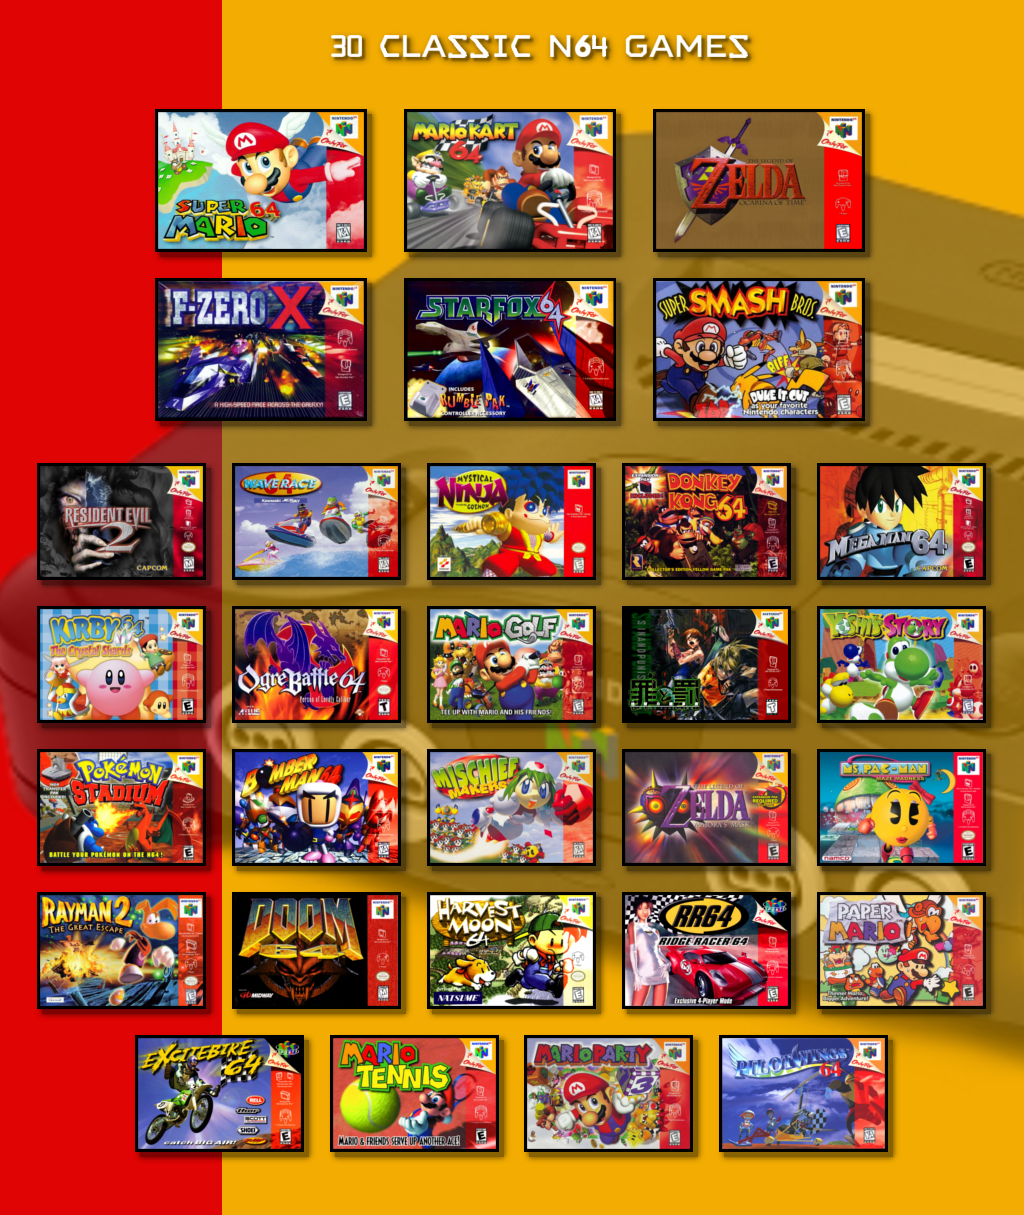 Nintendo 64 Classic Mini. Nintendo - super Nintendo игры. Nintendo 64 игры. Игры для Нинтендо 64 приставки. Формат игр нинтендо